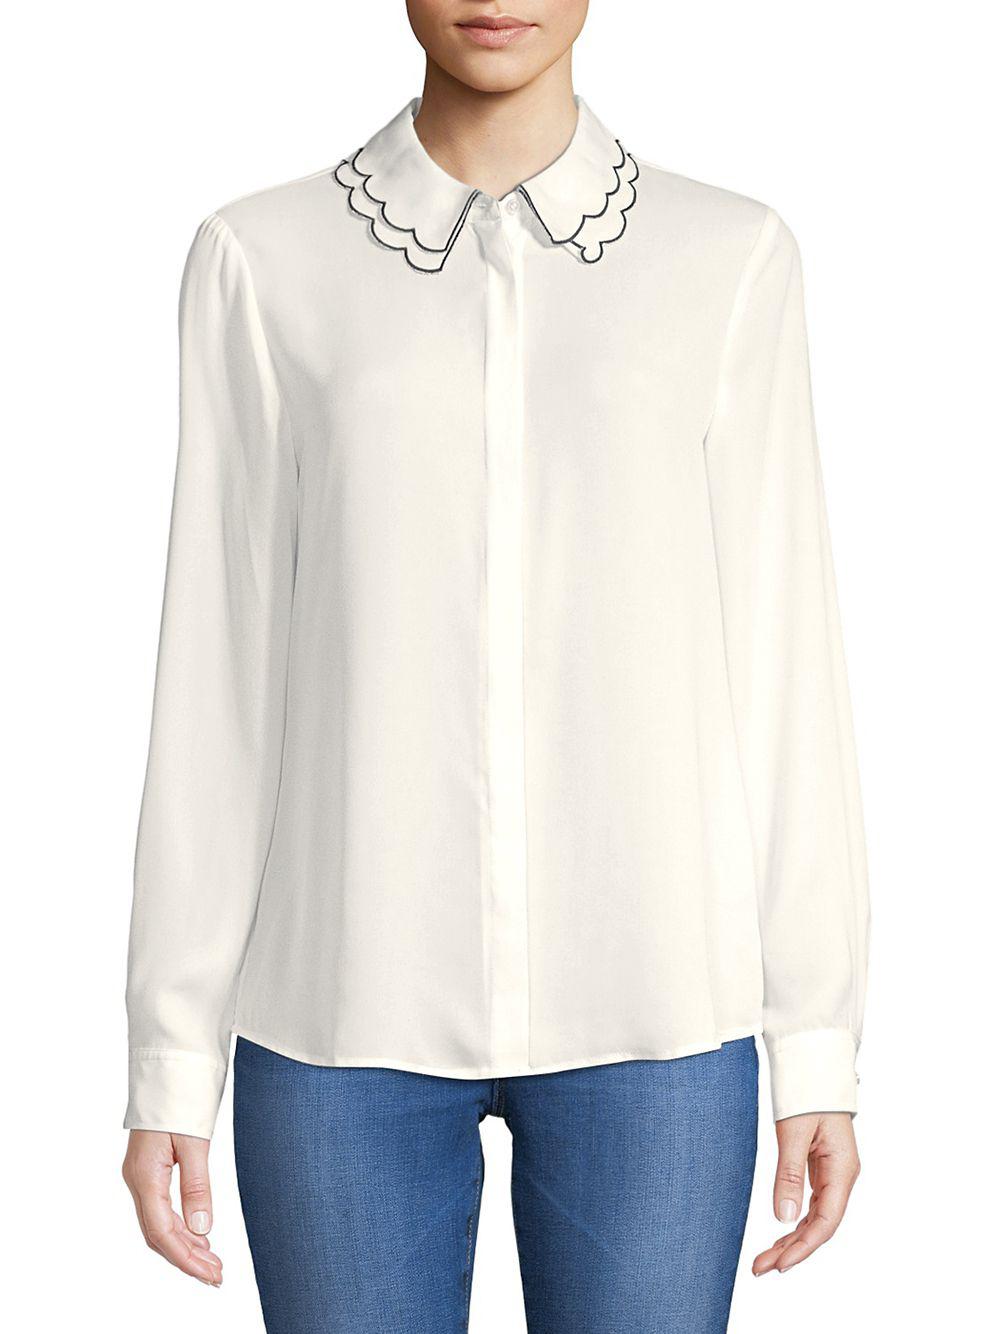 Image result for ivanka trump white blouse